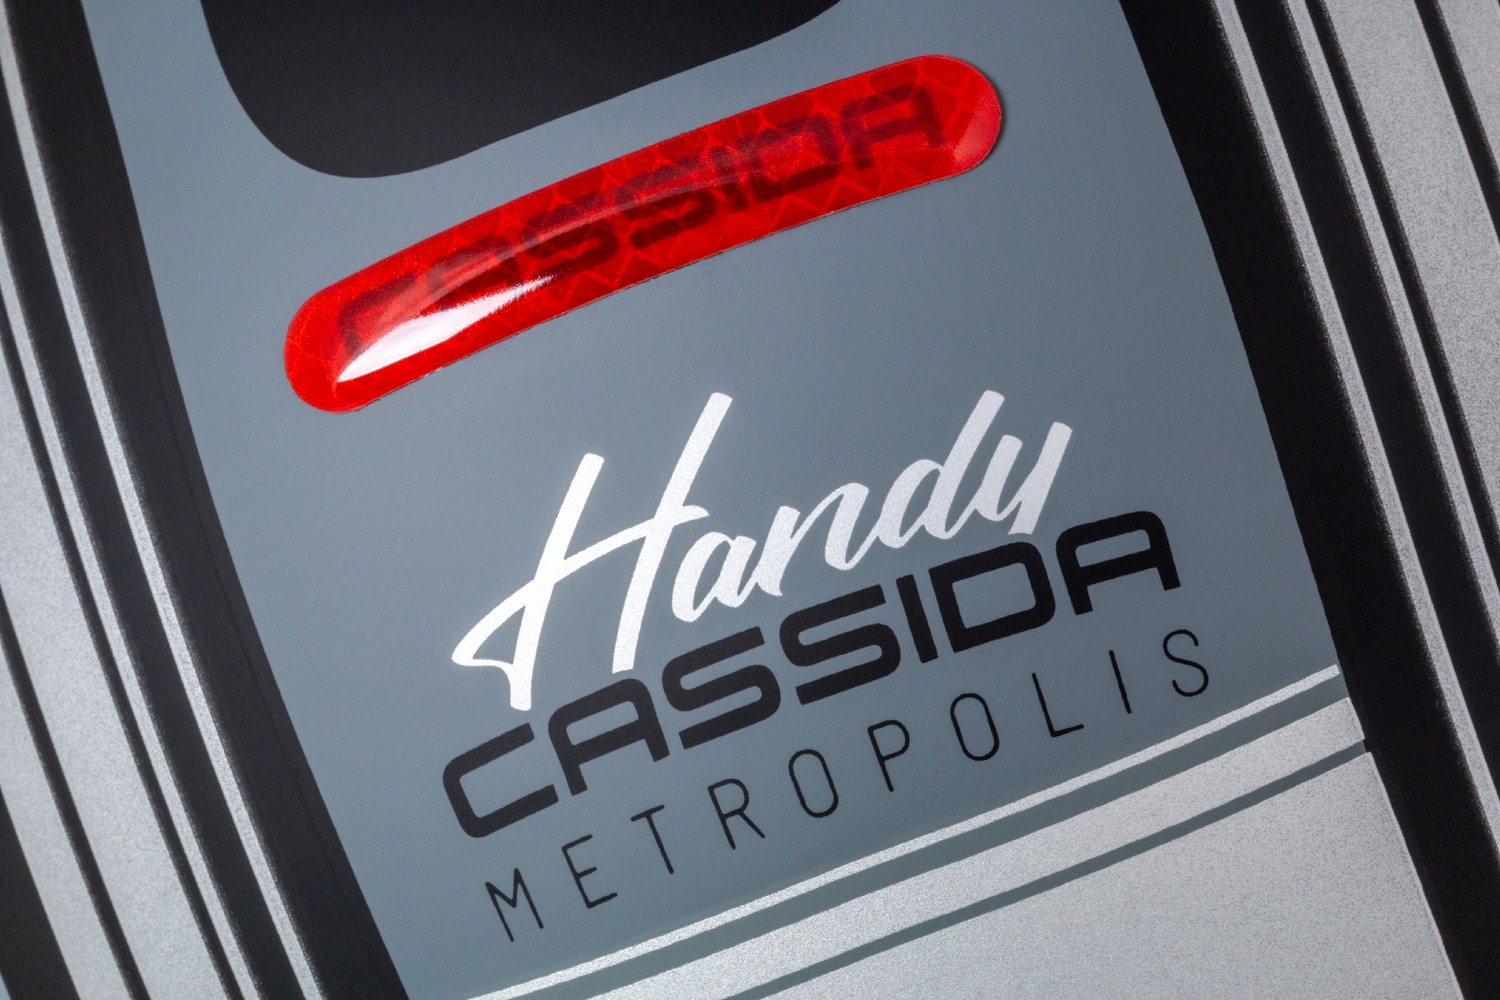 helmet Handy Metropolis Vision, CASSIDA (black matt/grey/reflective grey) 2023